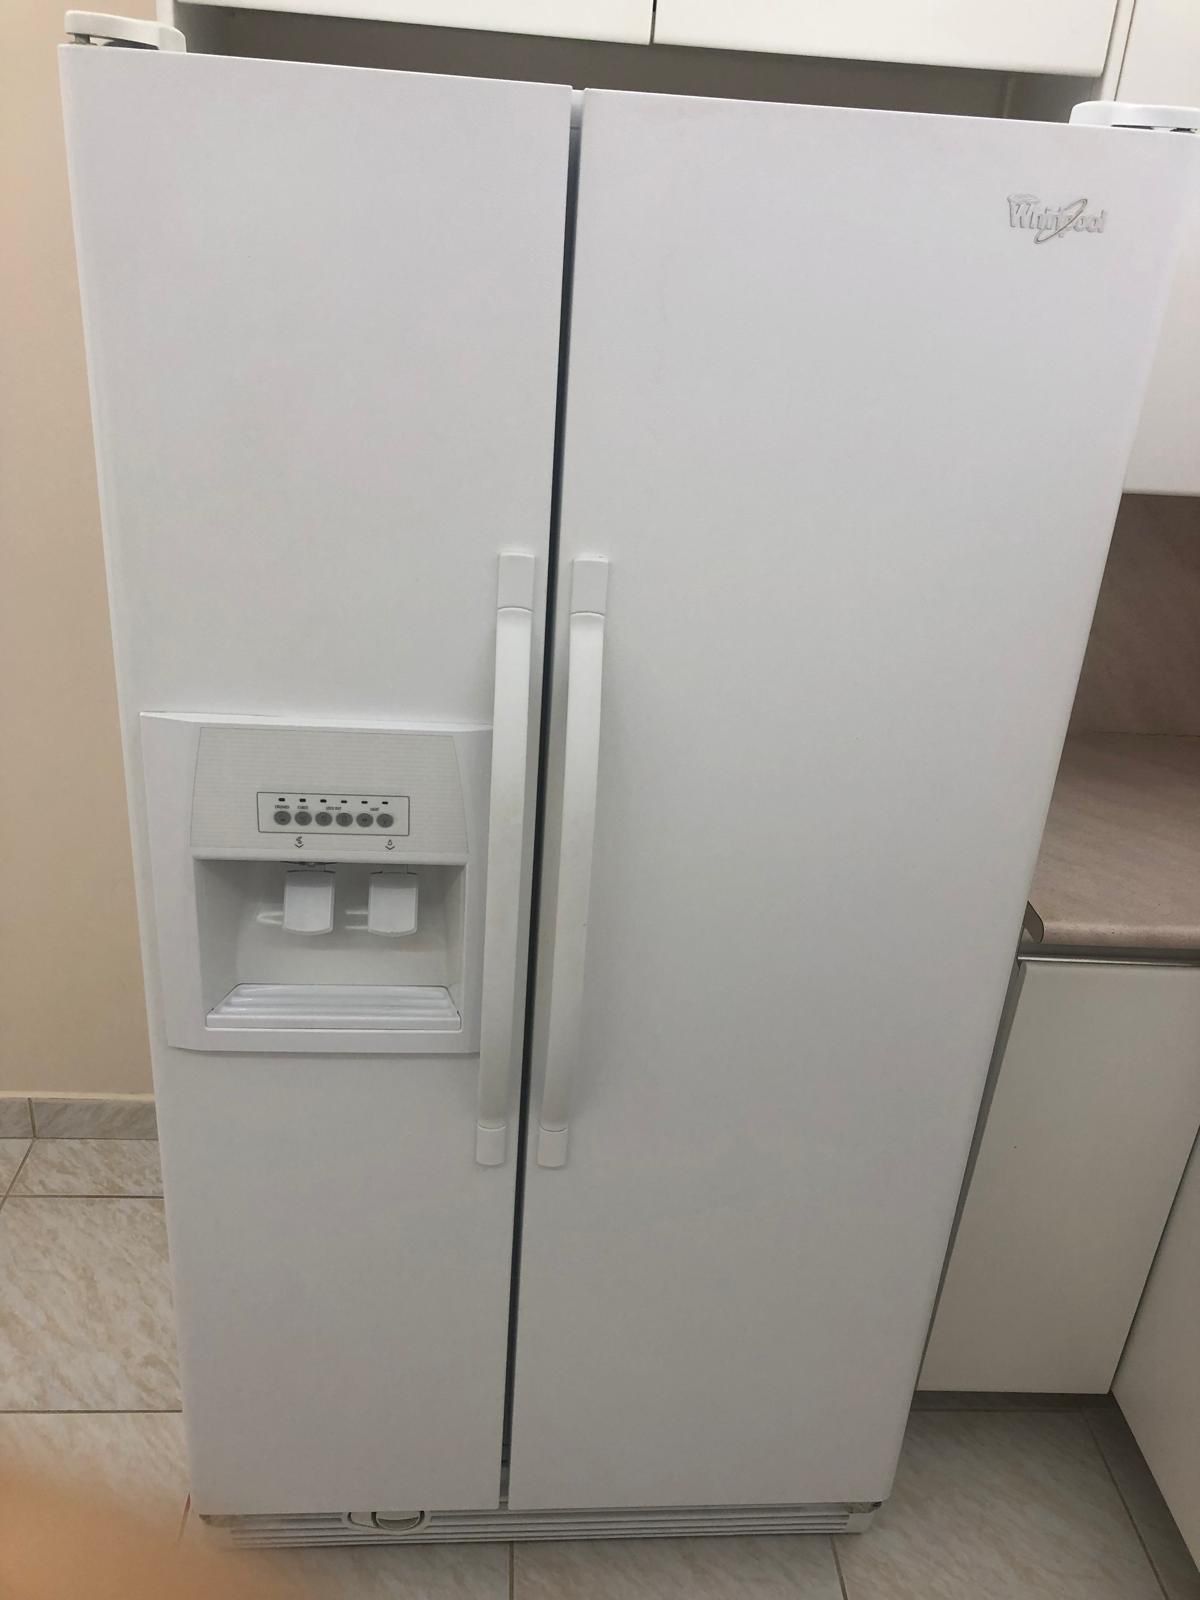 Whirlpool Refrigerator/ Freezer 